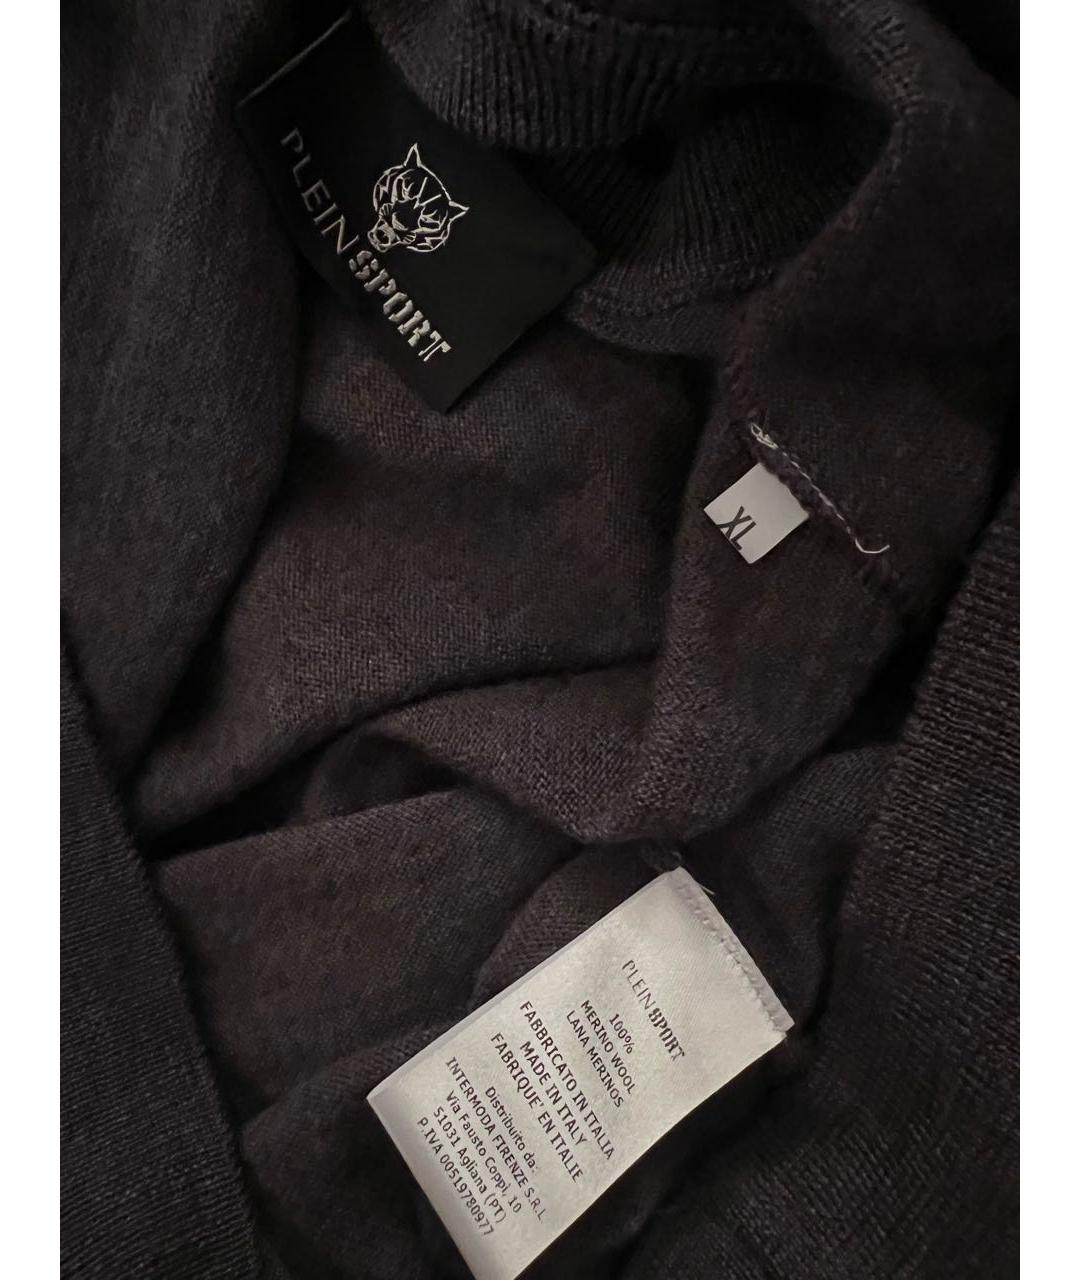 PLEIN SPORT Серый шерстяной джемпер / свитер, фото 3